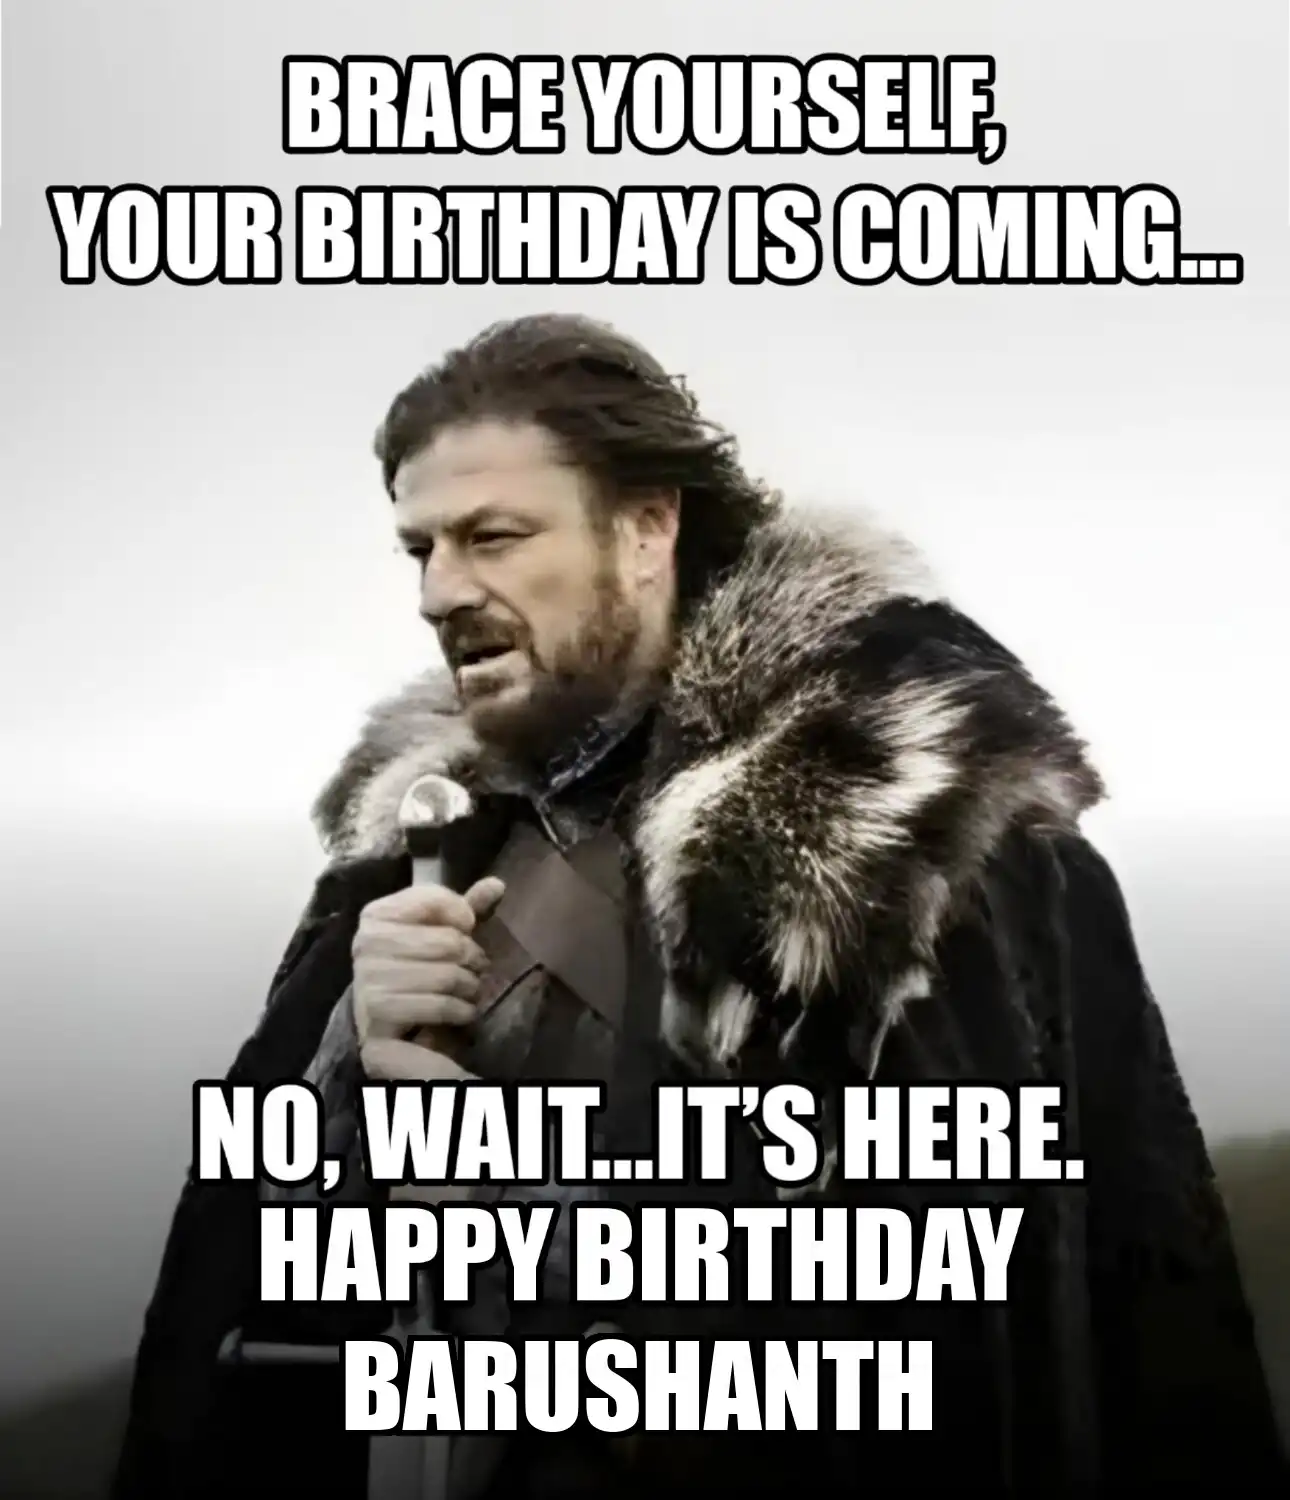 Happy Birthday Barushanth Brace Yourself Your Birthday Is Coming Meme